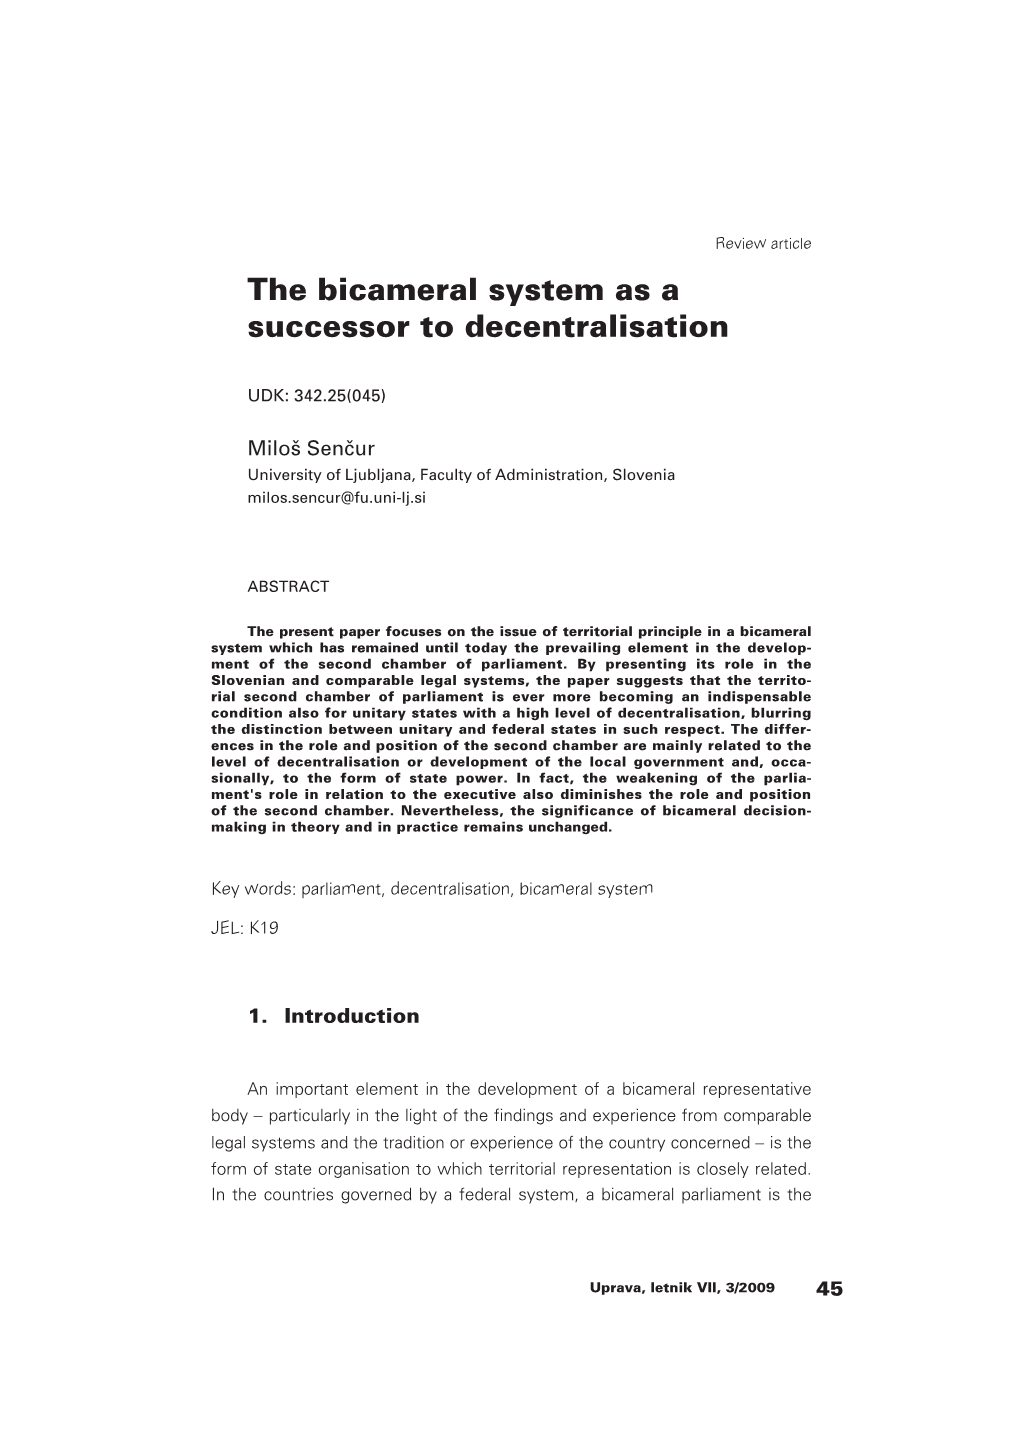 The Bicameral System As a Successor to Decentralisation